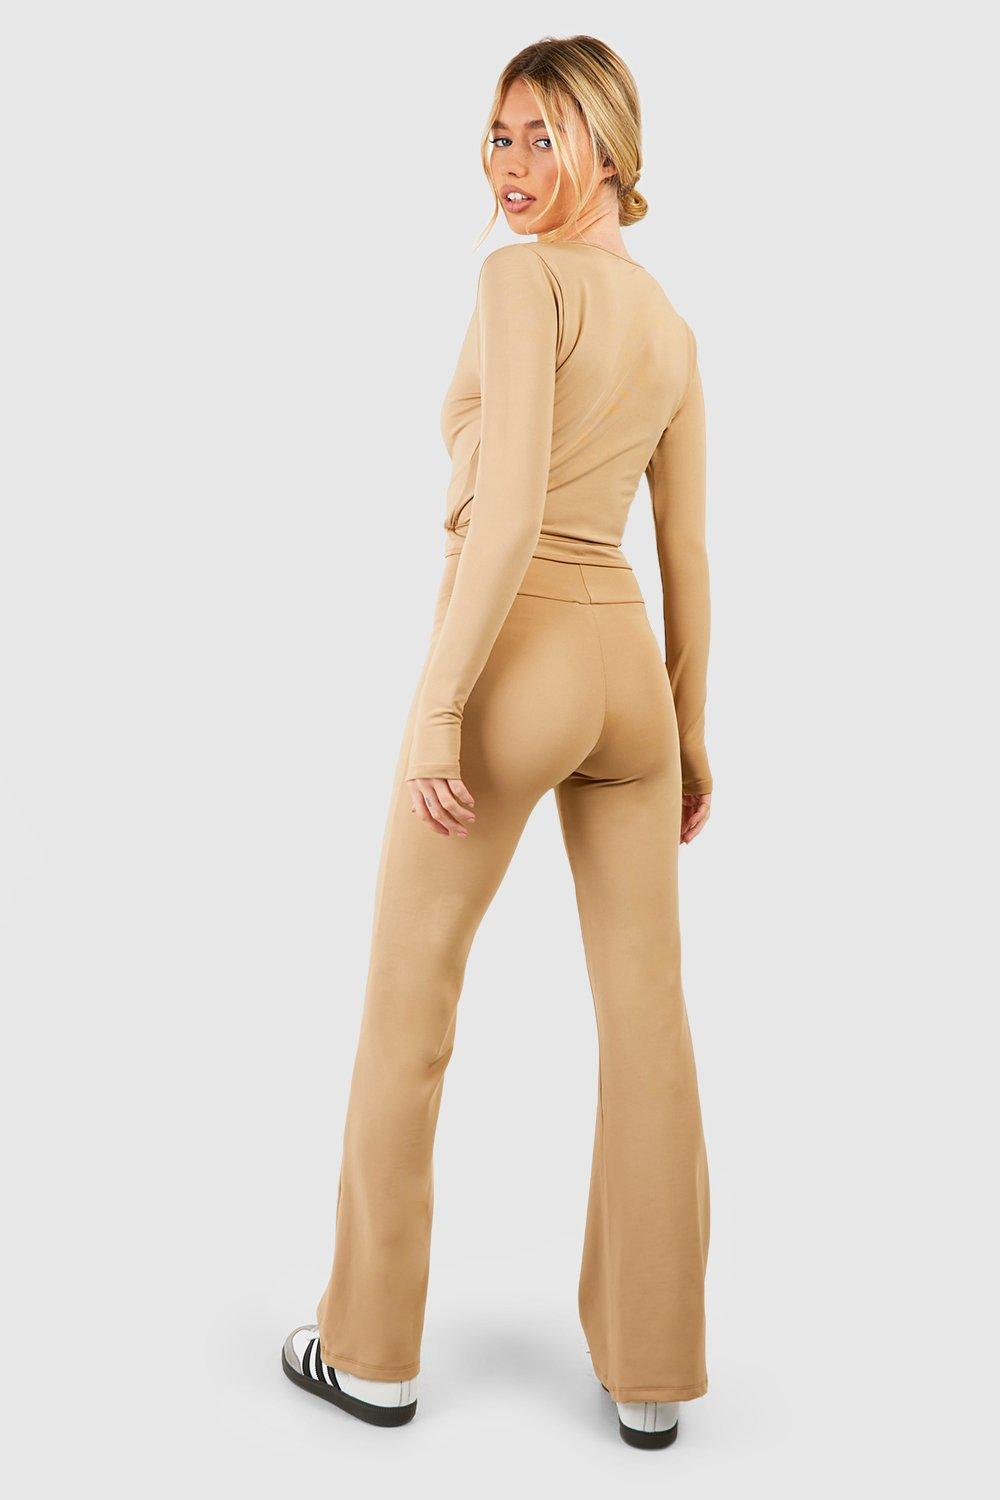 Women's Color Block Fold Over Waist Yoga Pants Flare Leg Workout